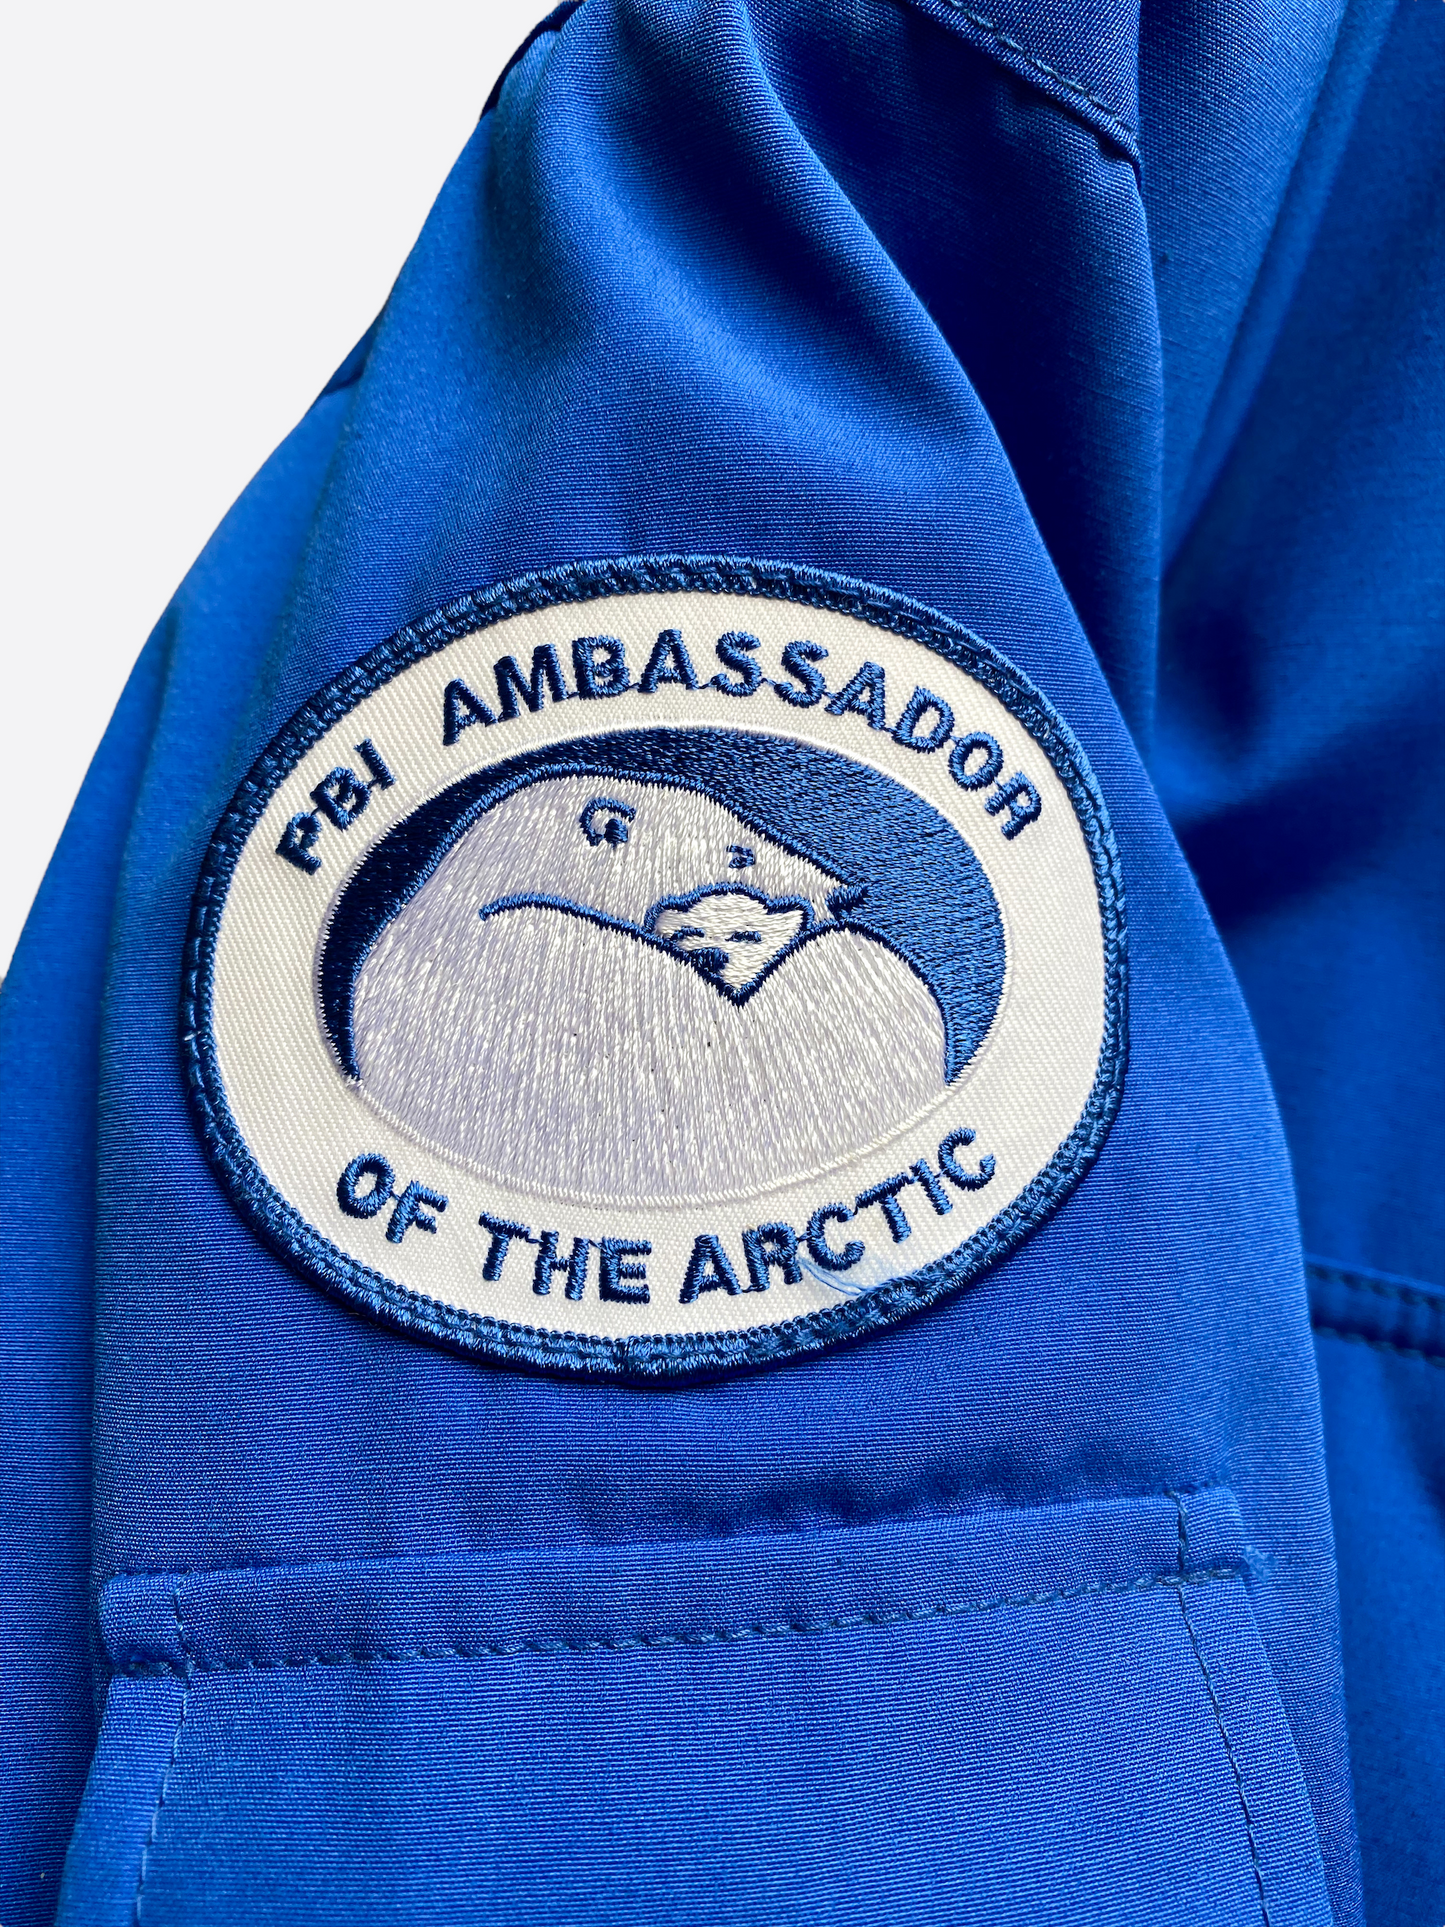 Canada Goose PBI Expedition Men's Jacket